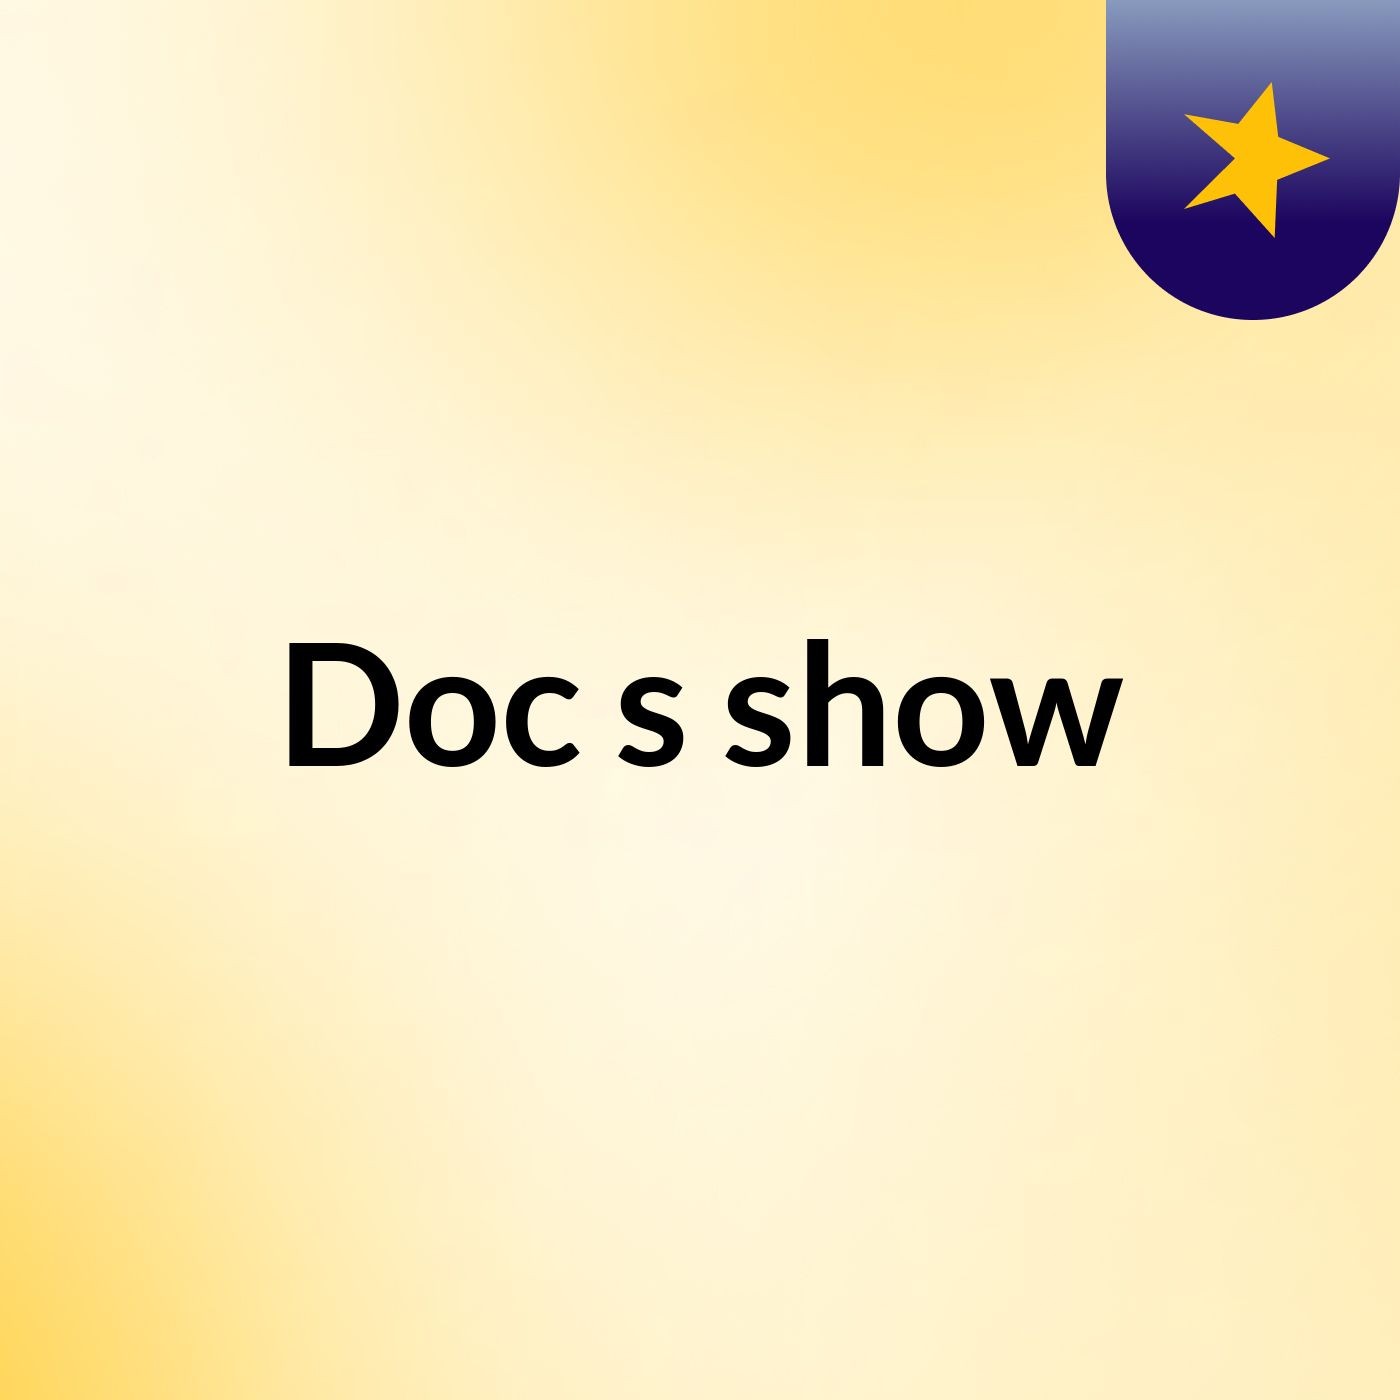 Doc's show